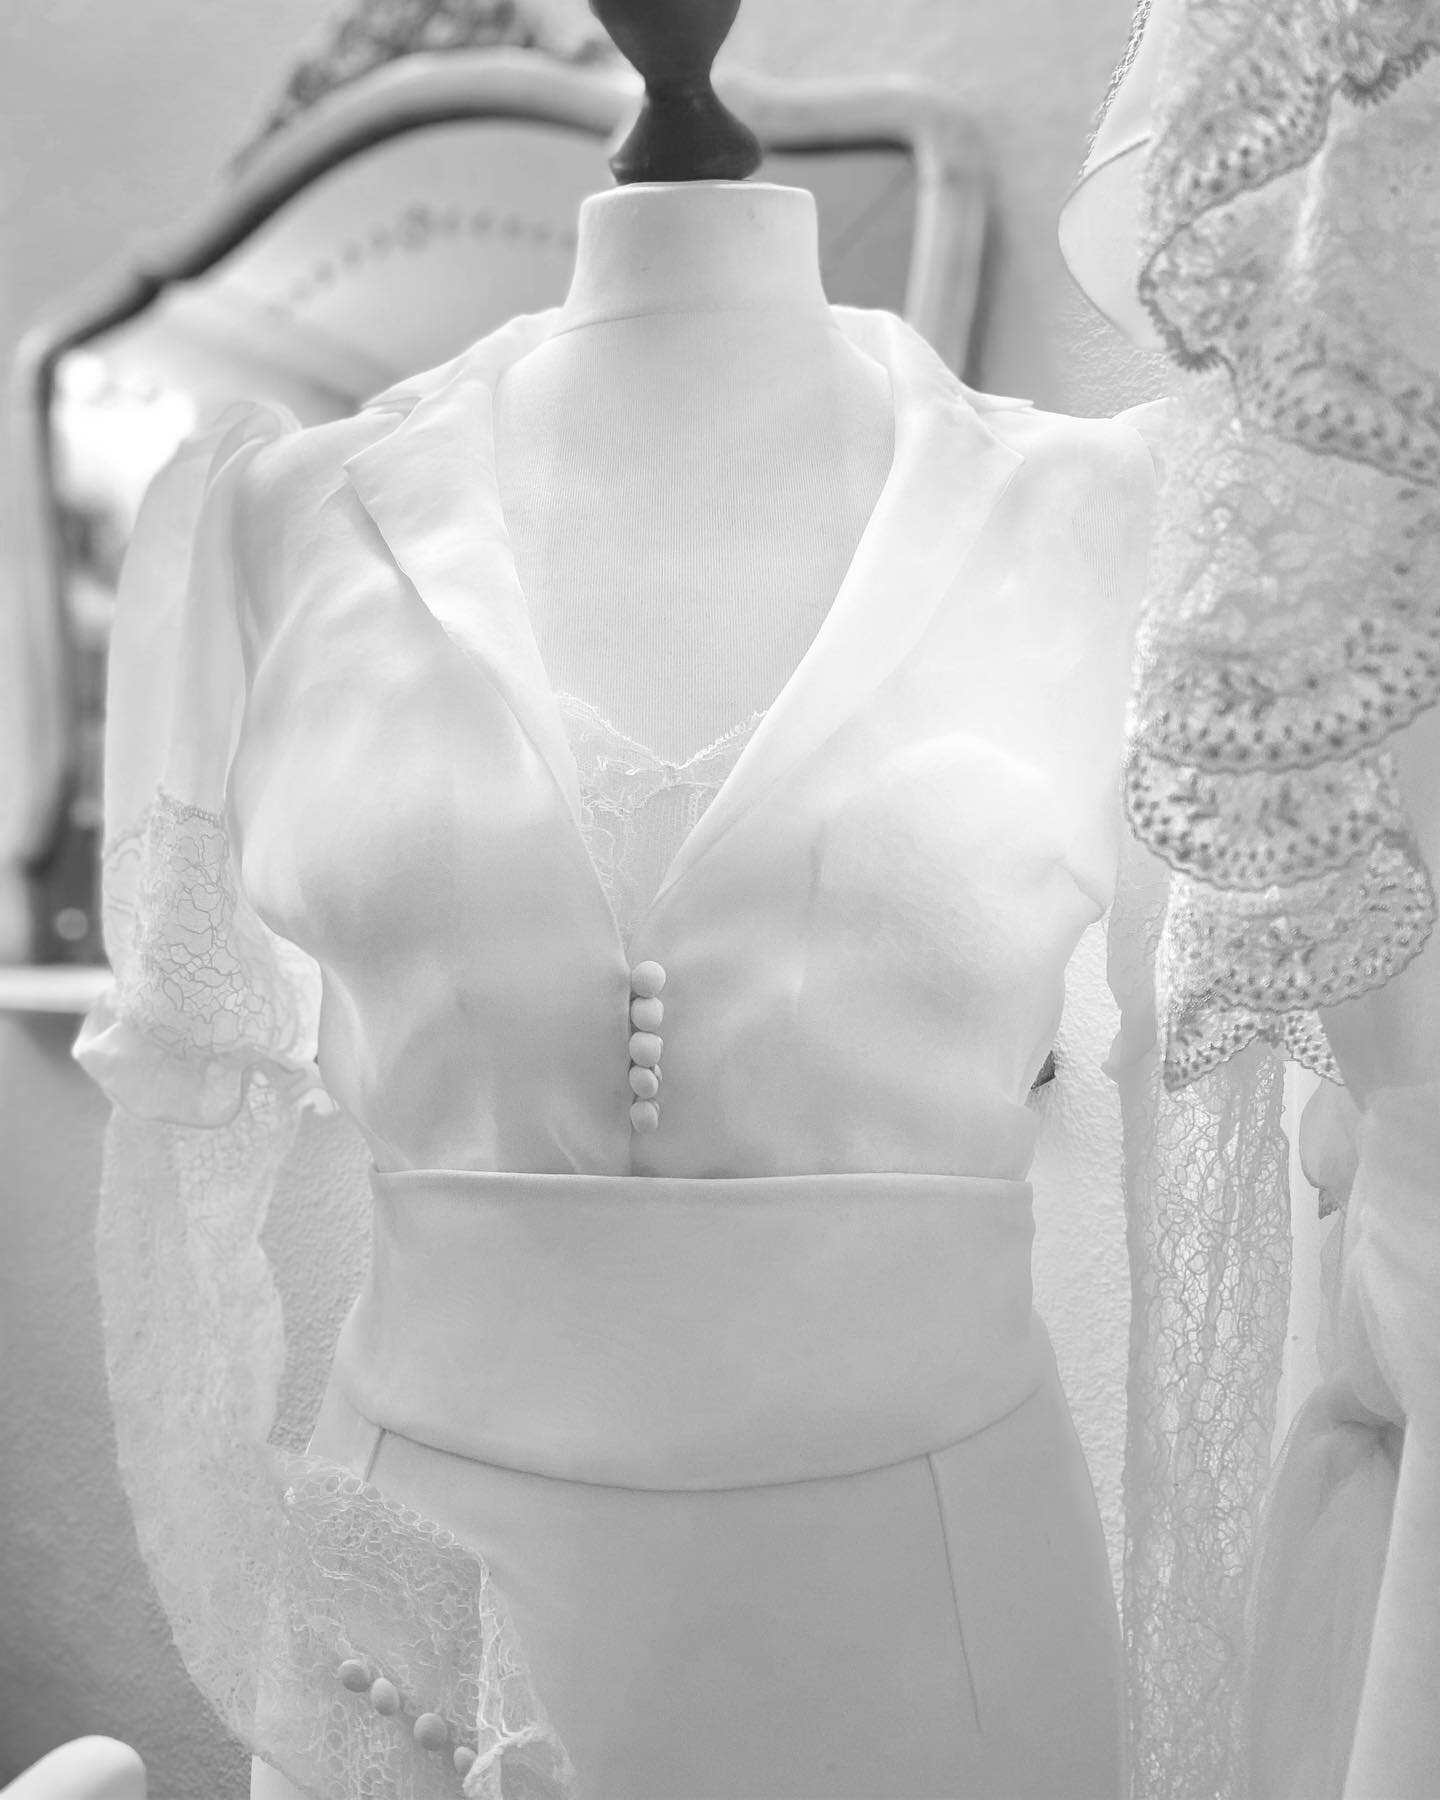 🤍 Blusa de Novia en organza con encaje chantilly bordado a mano.🤍 #vestidosdenovia #atelier #madrid #novias #bodas